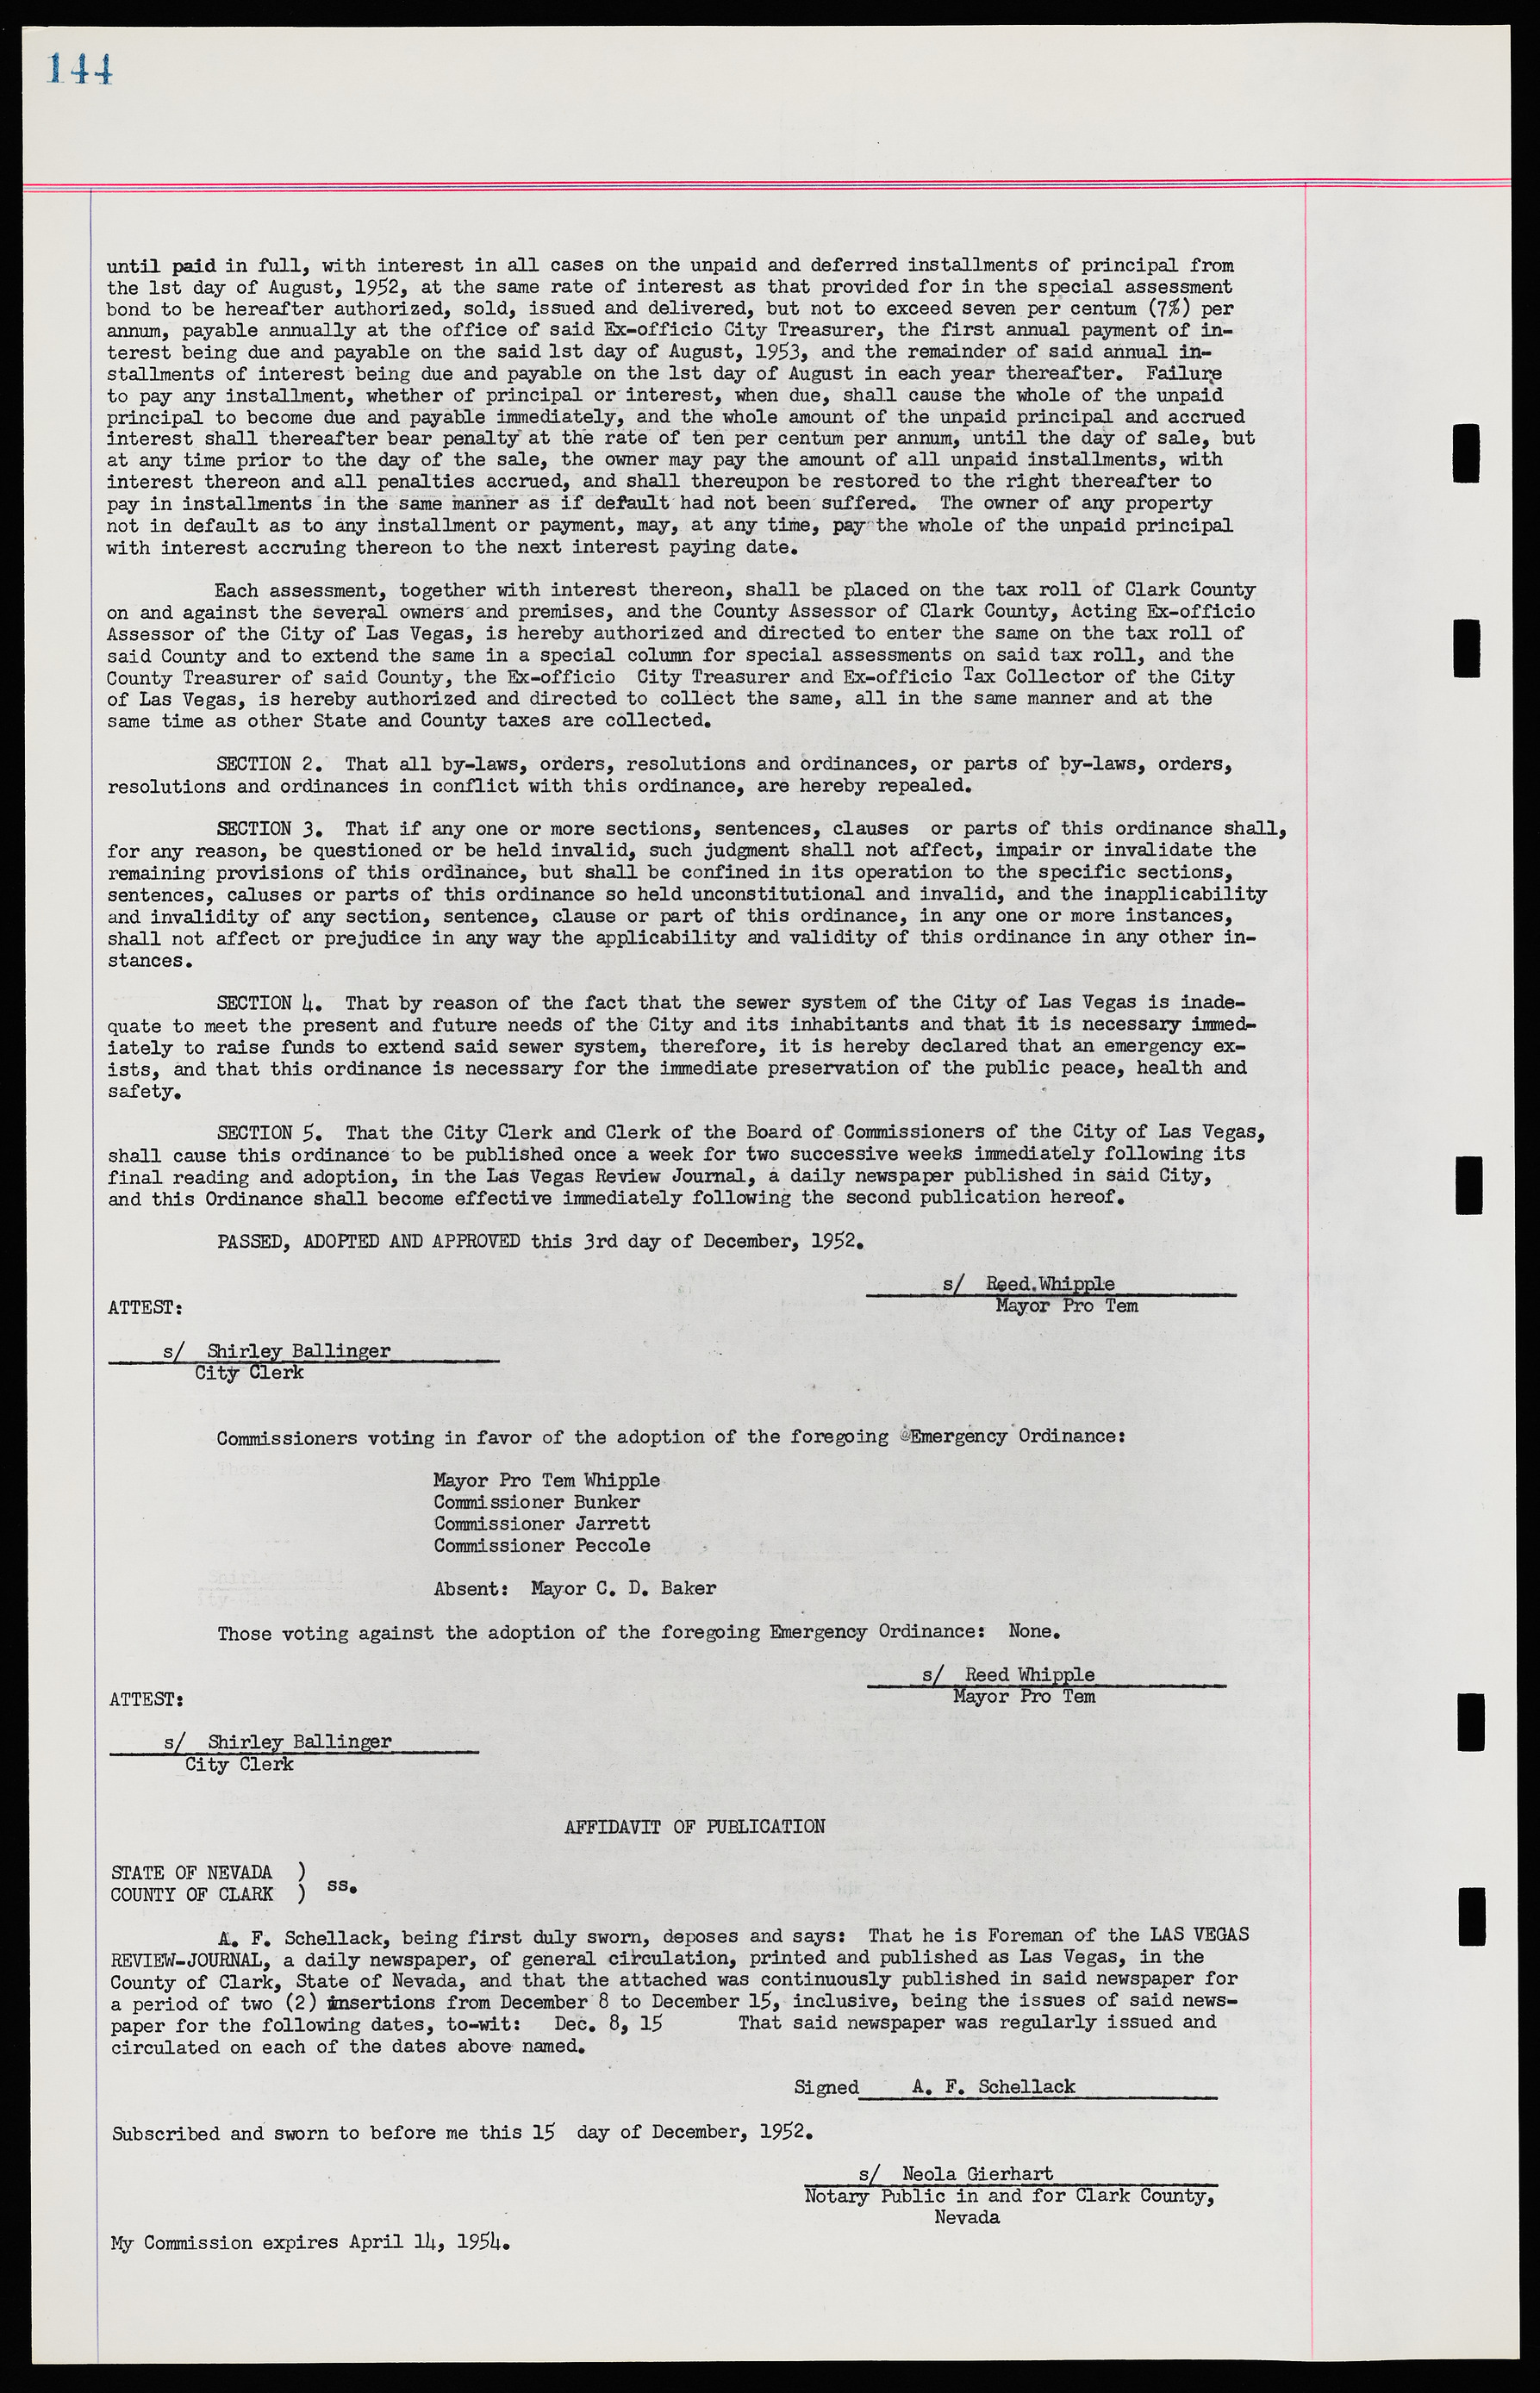 Las Vegas City Ordinances, November 13, 1950 to August 6, 1958, lvc000015-152